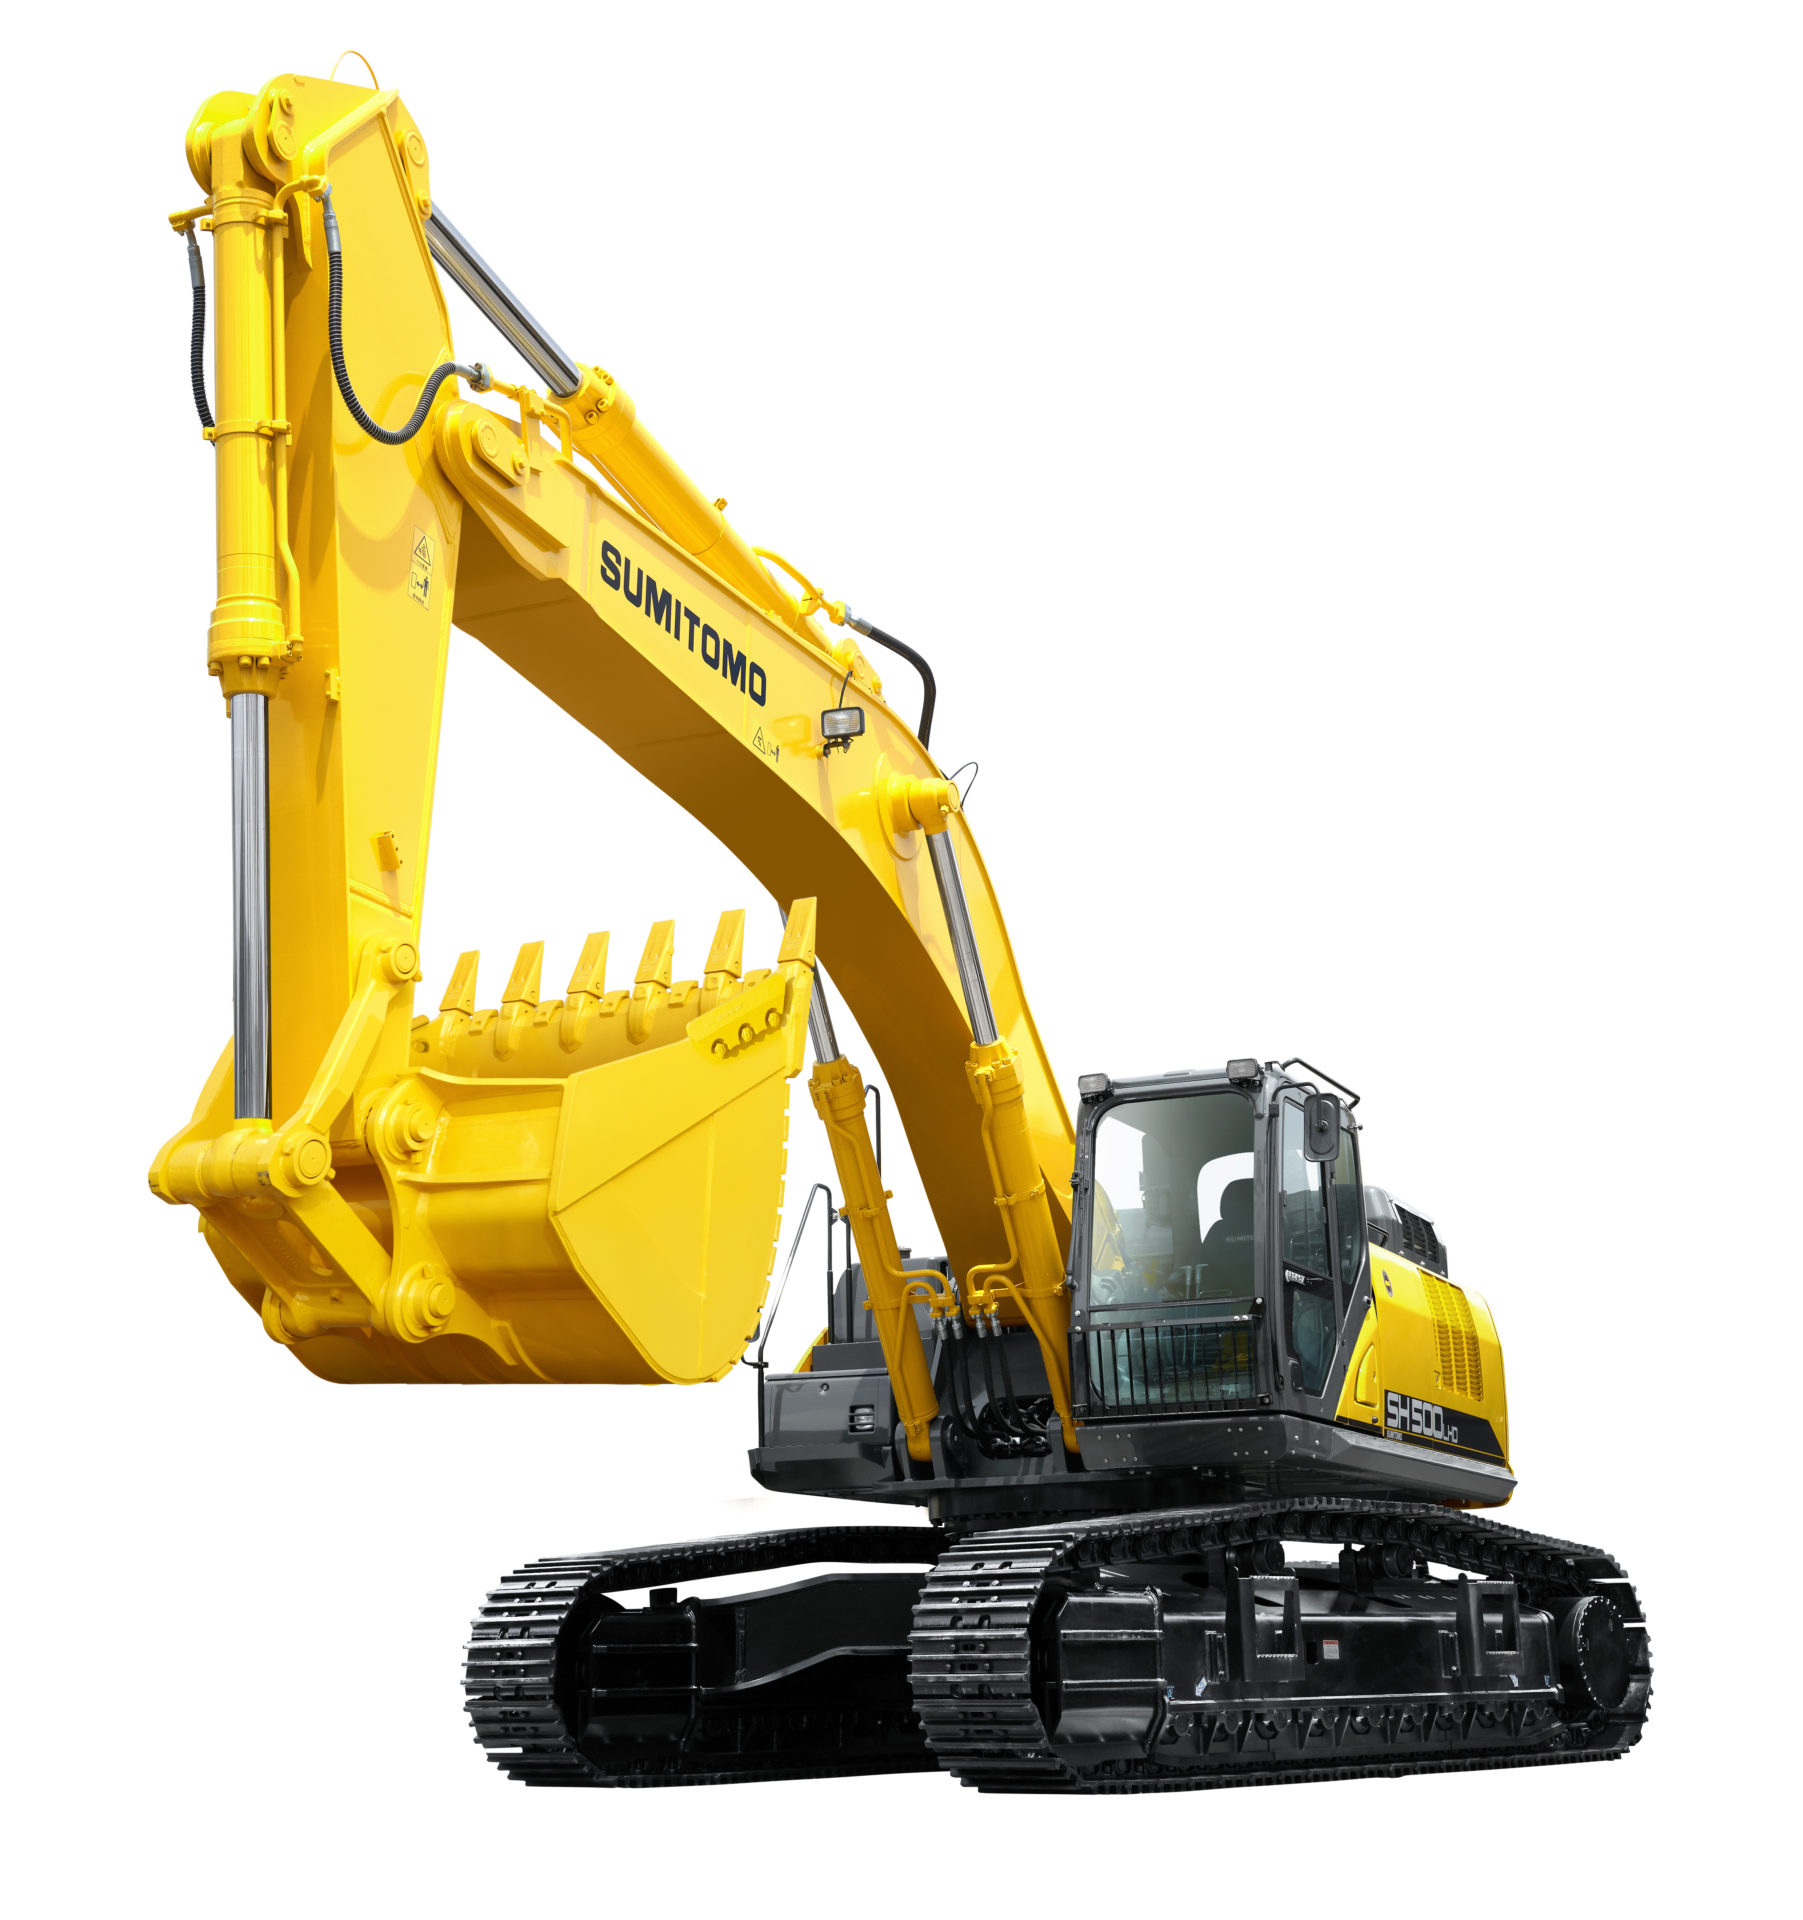 SH500LHD-6 MASS | Sumitomo Construction Machinery - Excavator